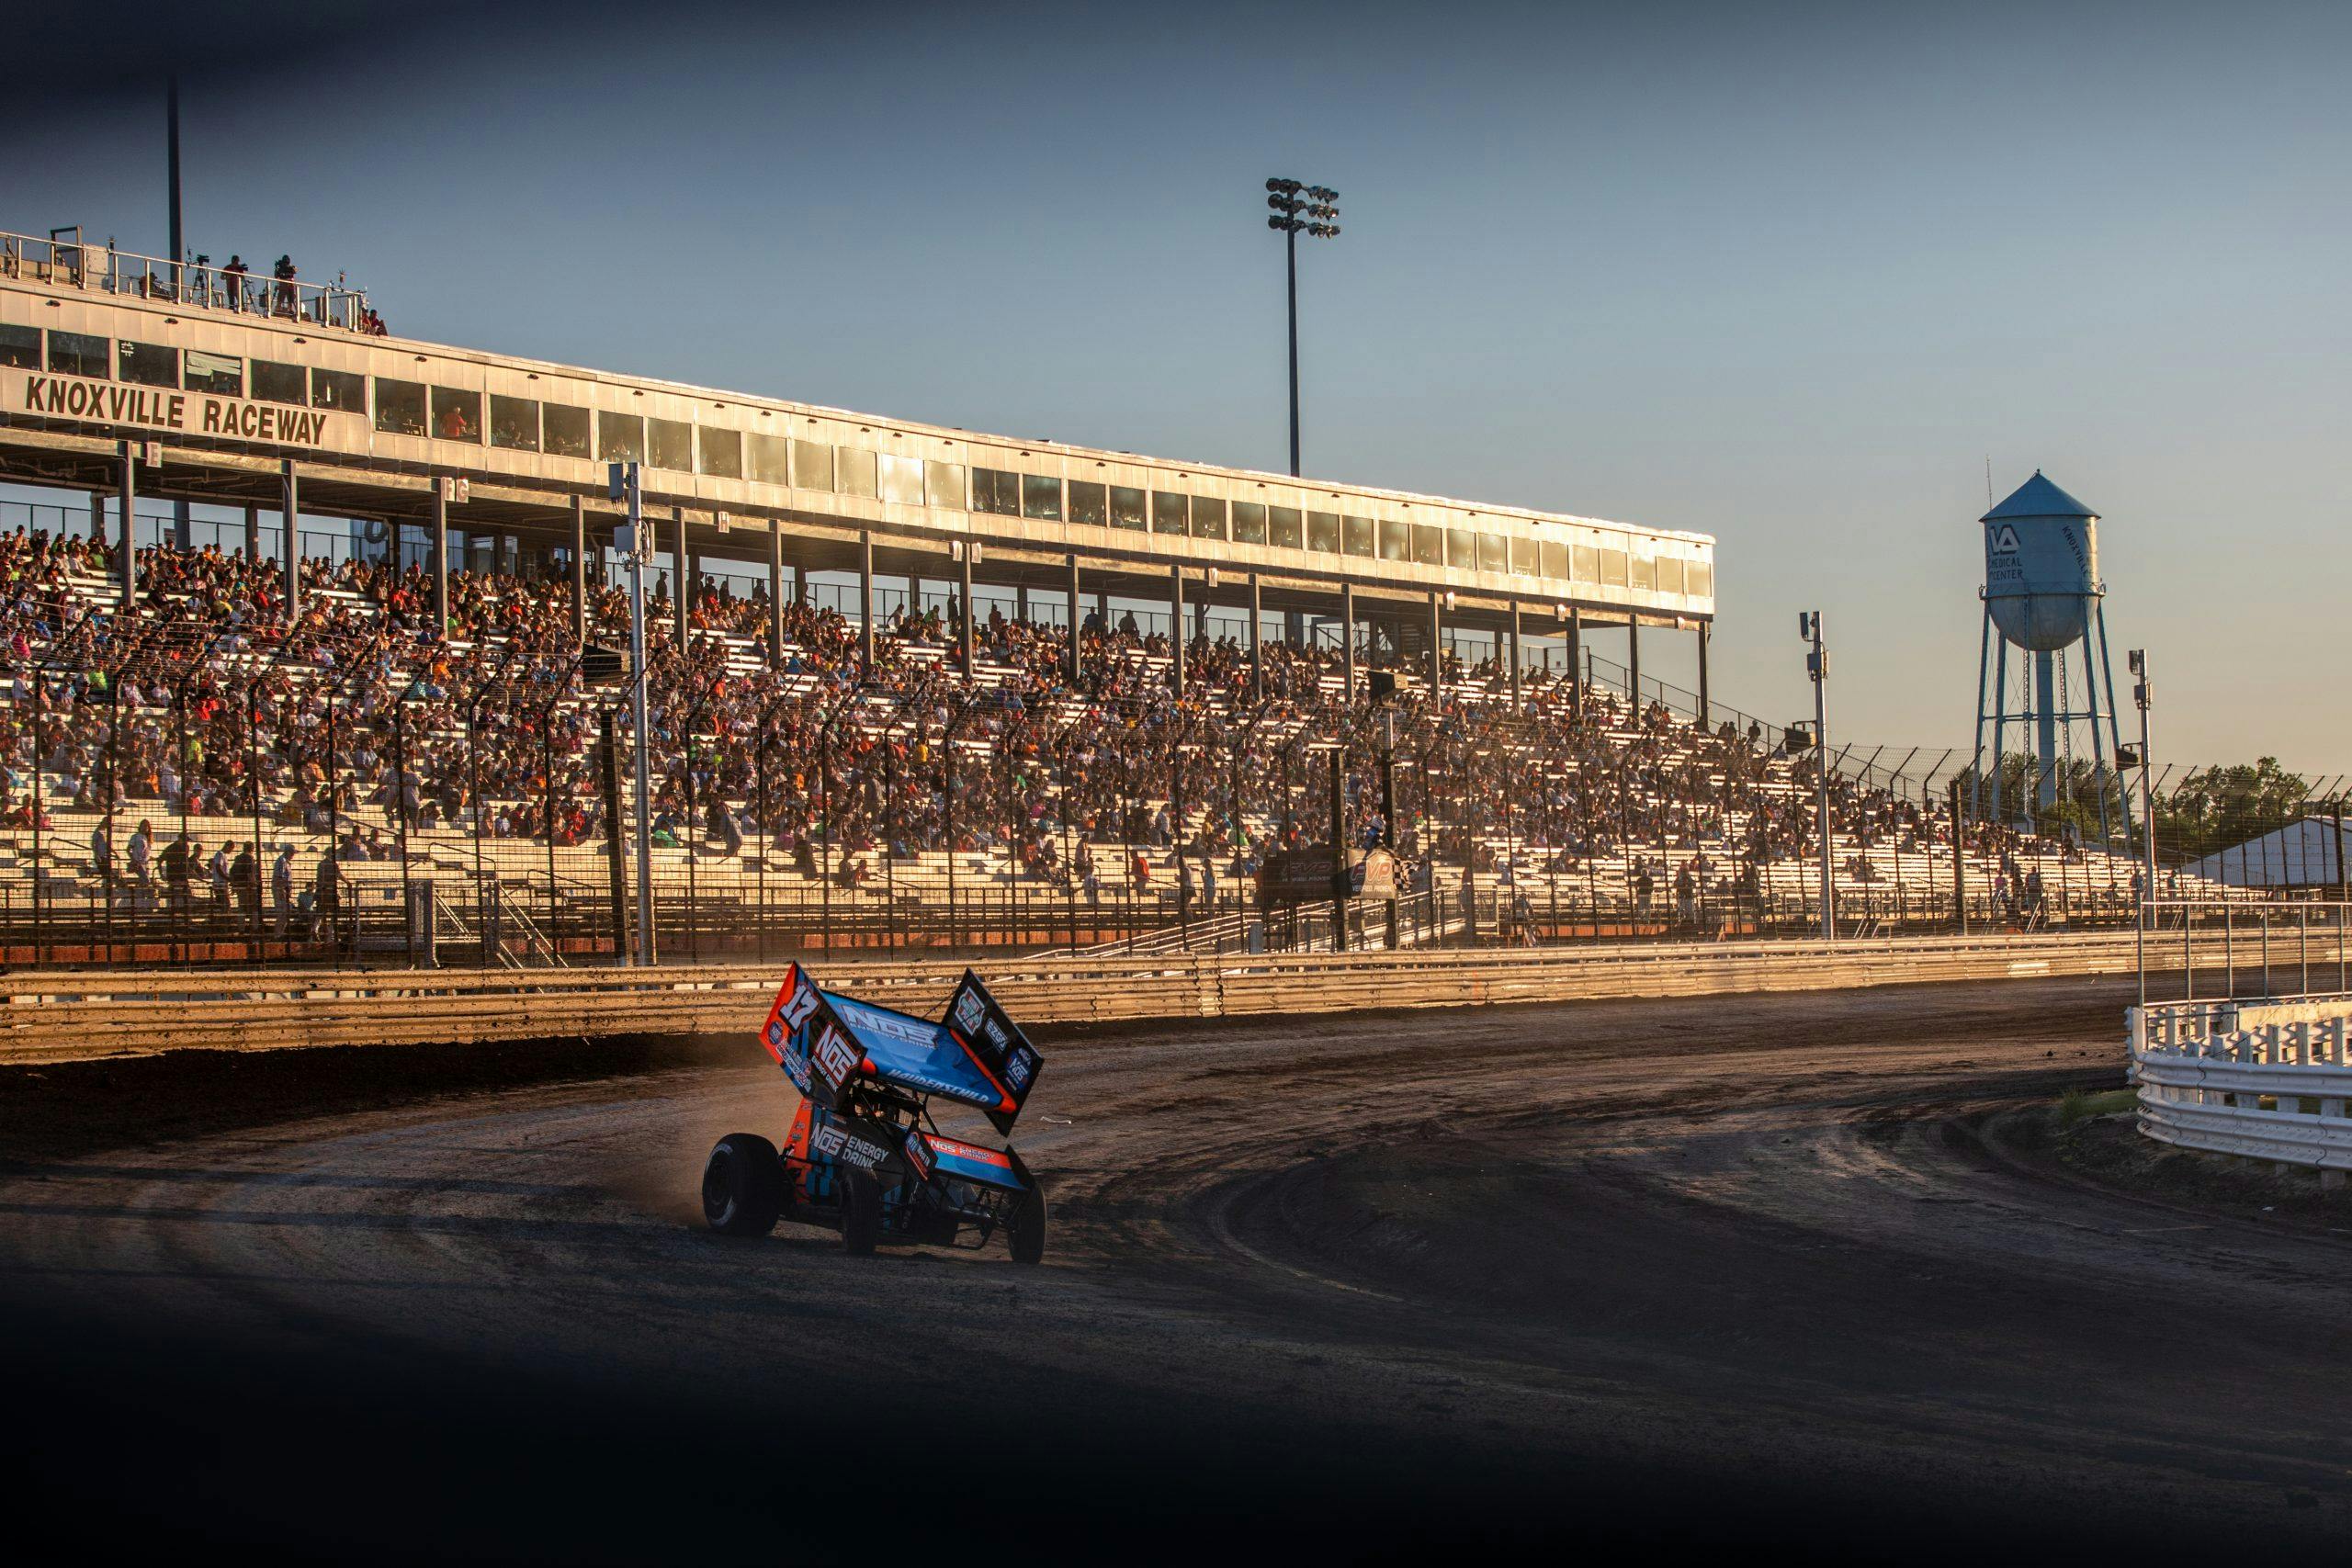 Knoxville Raceway dirt track racing grandstands action